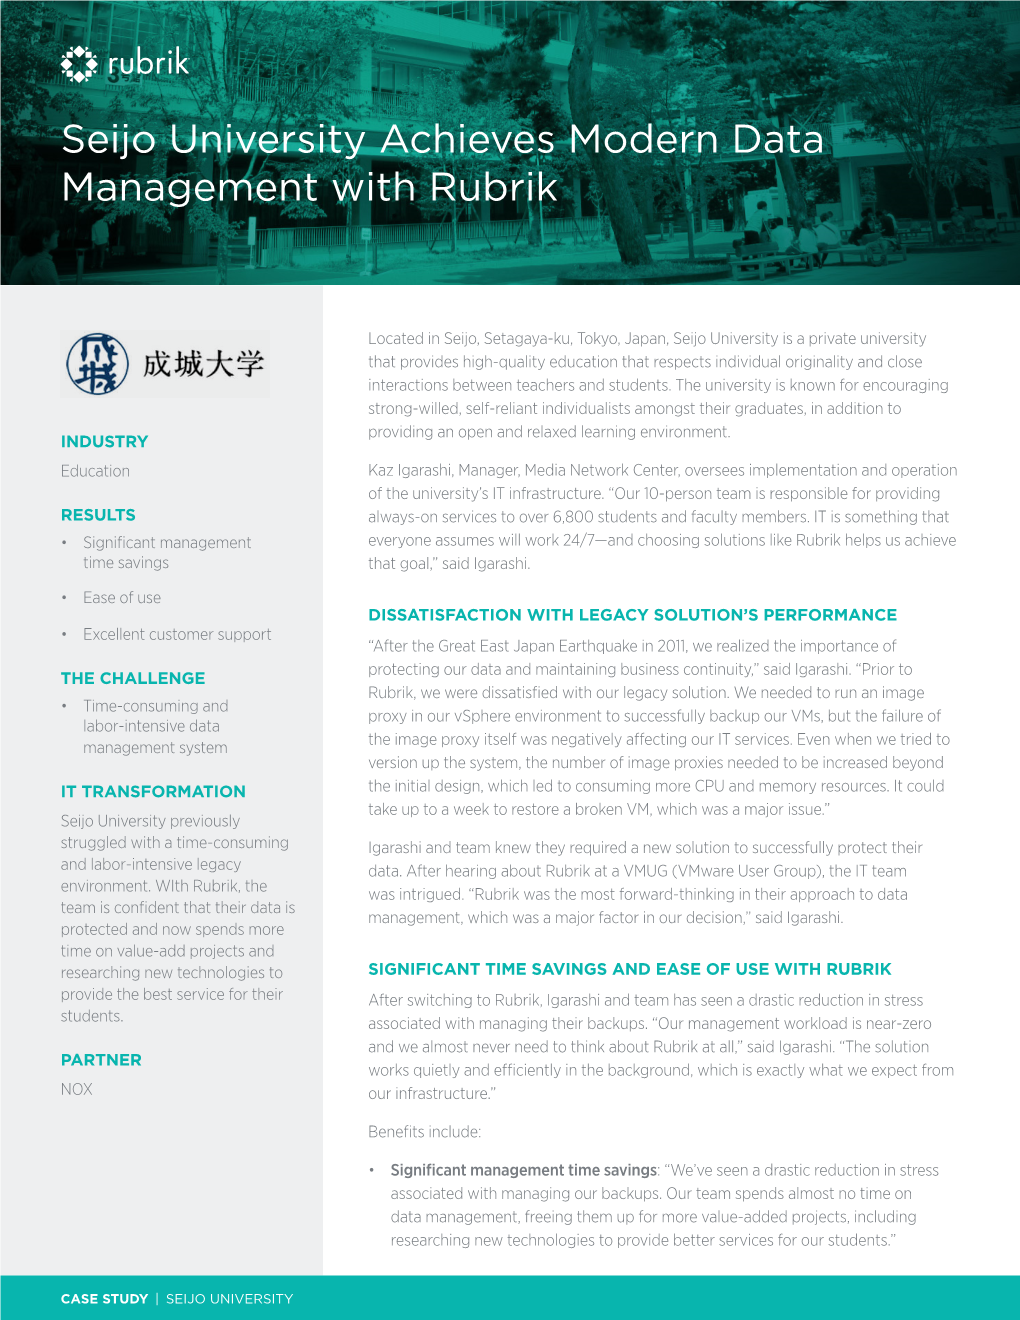 Seijo University Achieves Modern Data Management with Rubrik